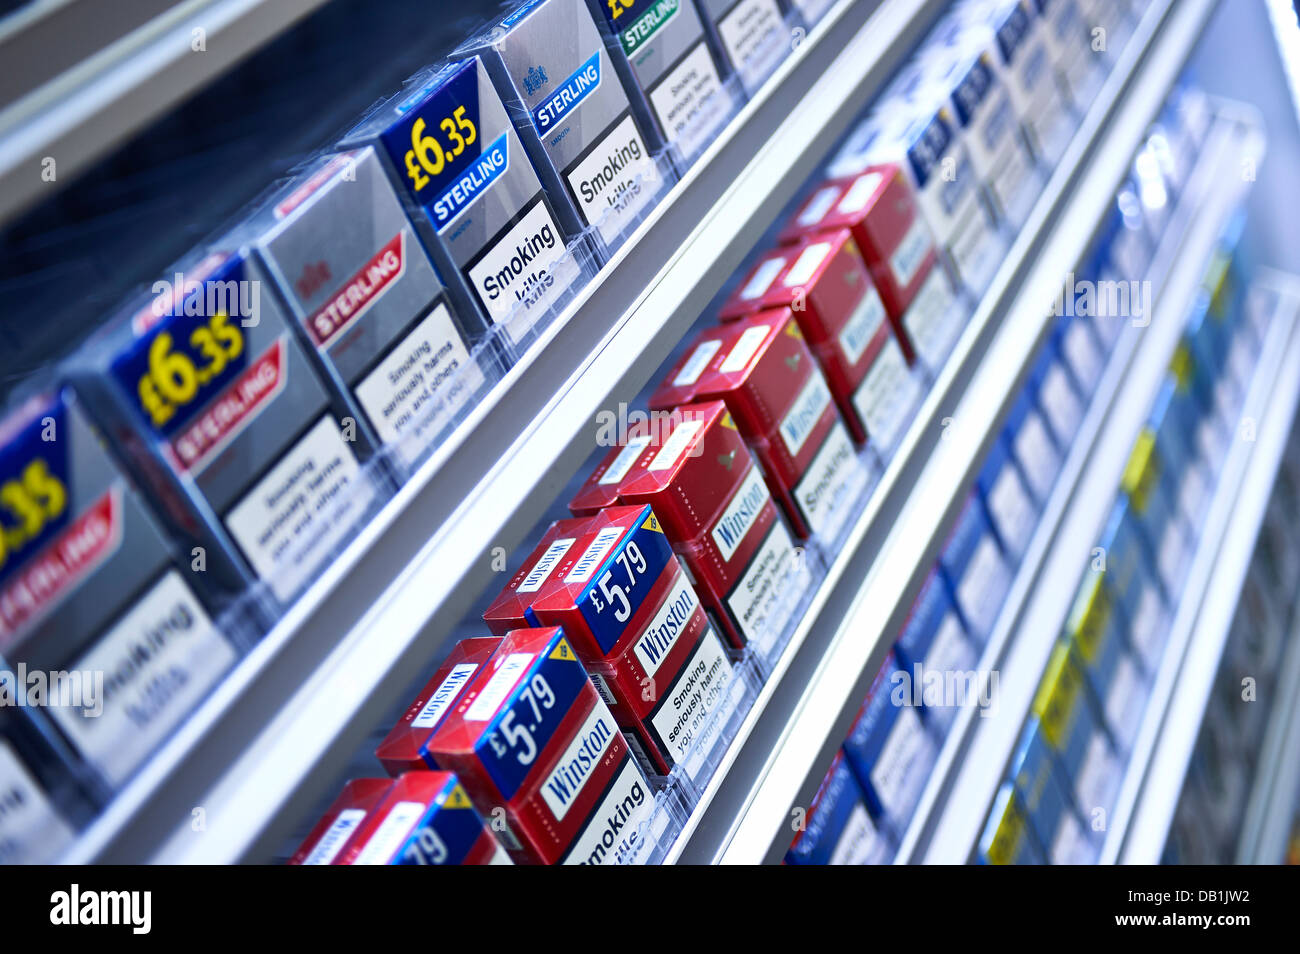 cigarettes on shelf Stock Photo